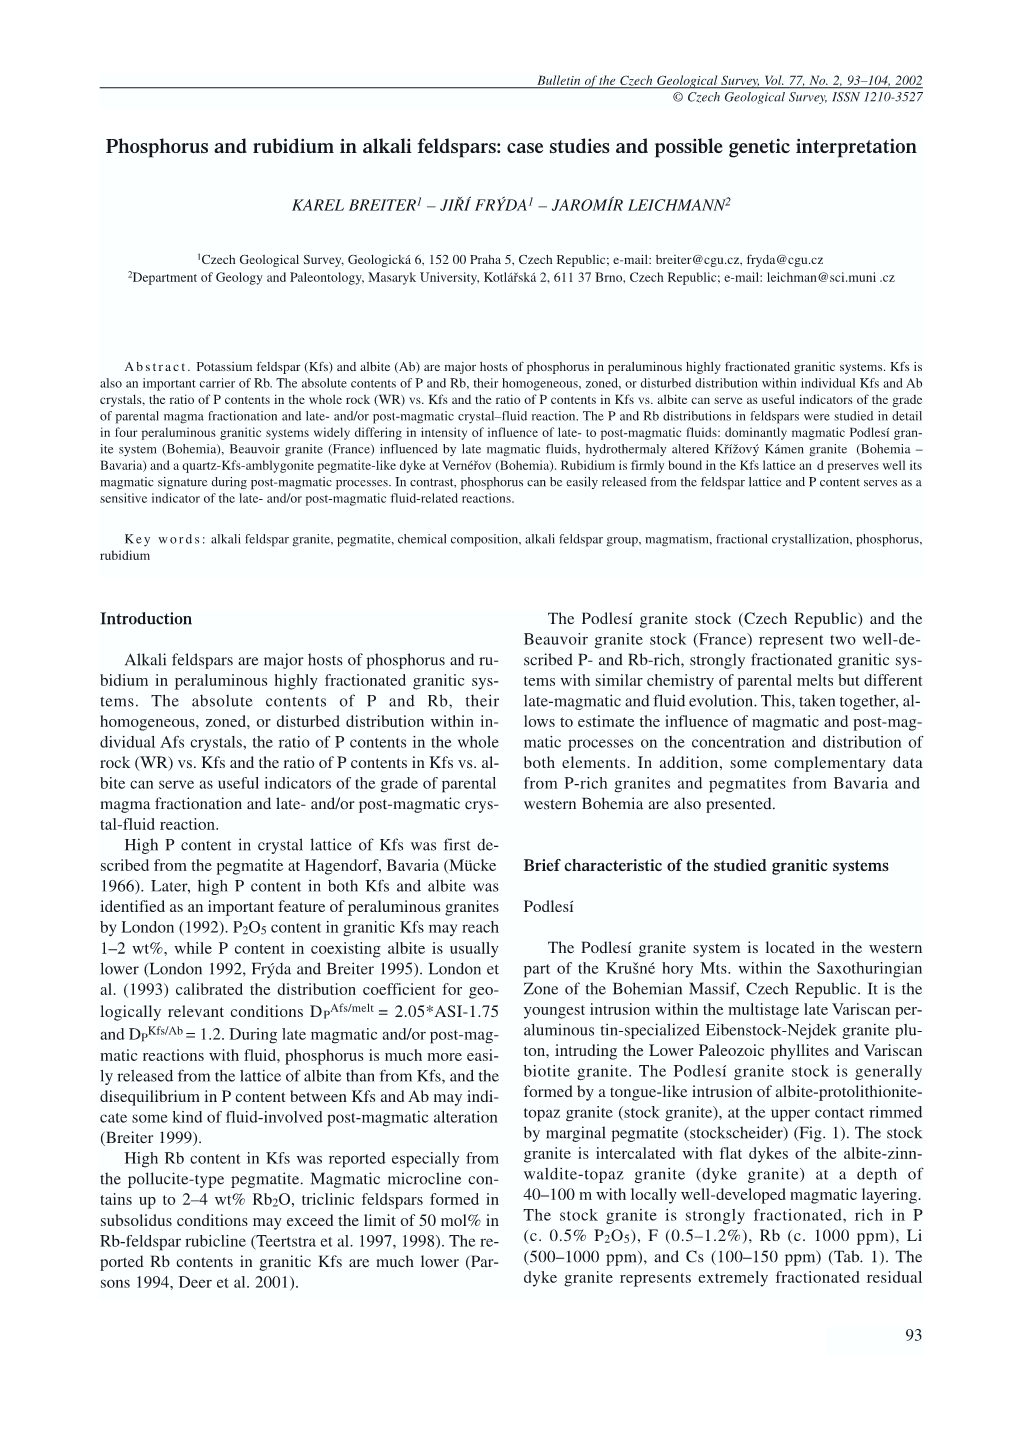 Phosphorus and Rubidium in Alkali Feldspars: Case Studies and Possible Genetic Interpretation